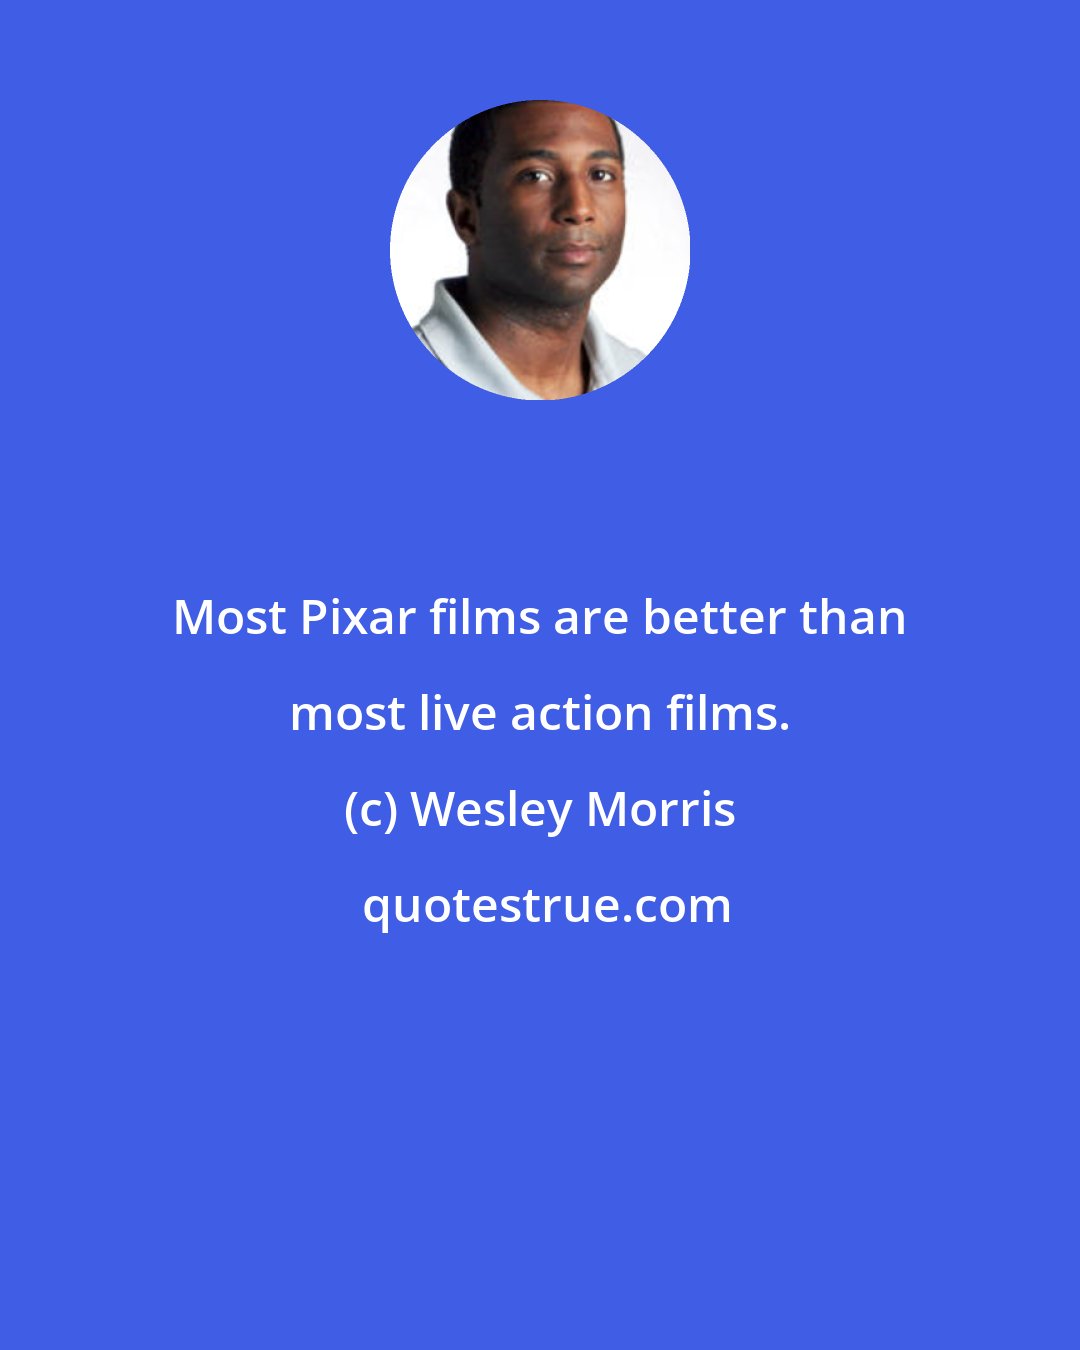 Wesley Morris: Most Pixar films are better than most live action films.